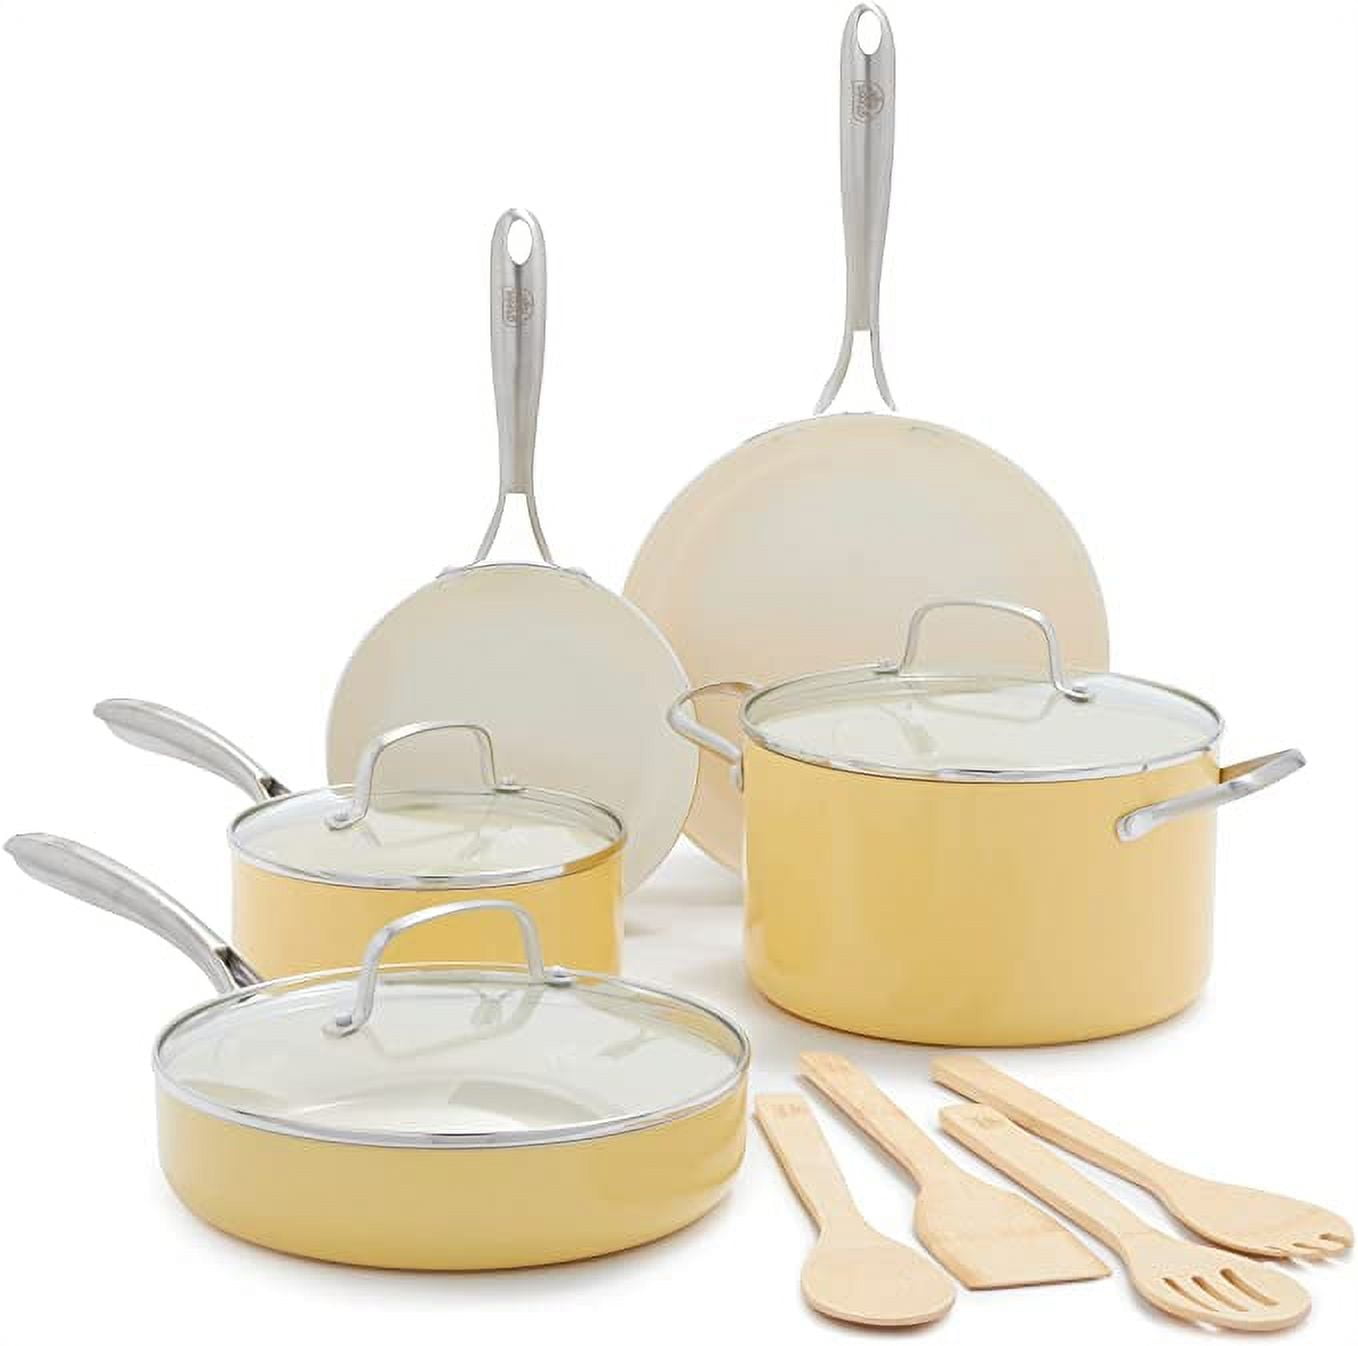 All in One Plus Pan, 5 Qt Ceramic Non Stick - Mustard Yellow